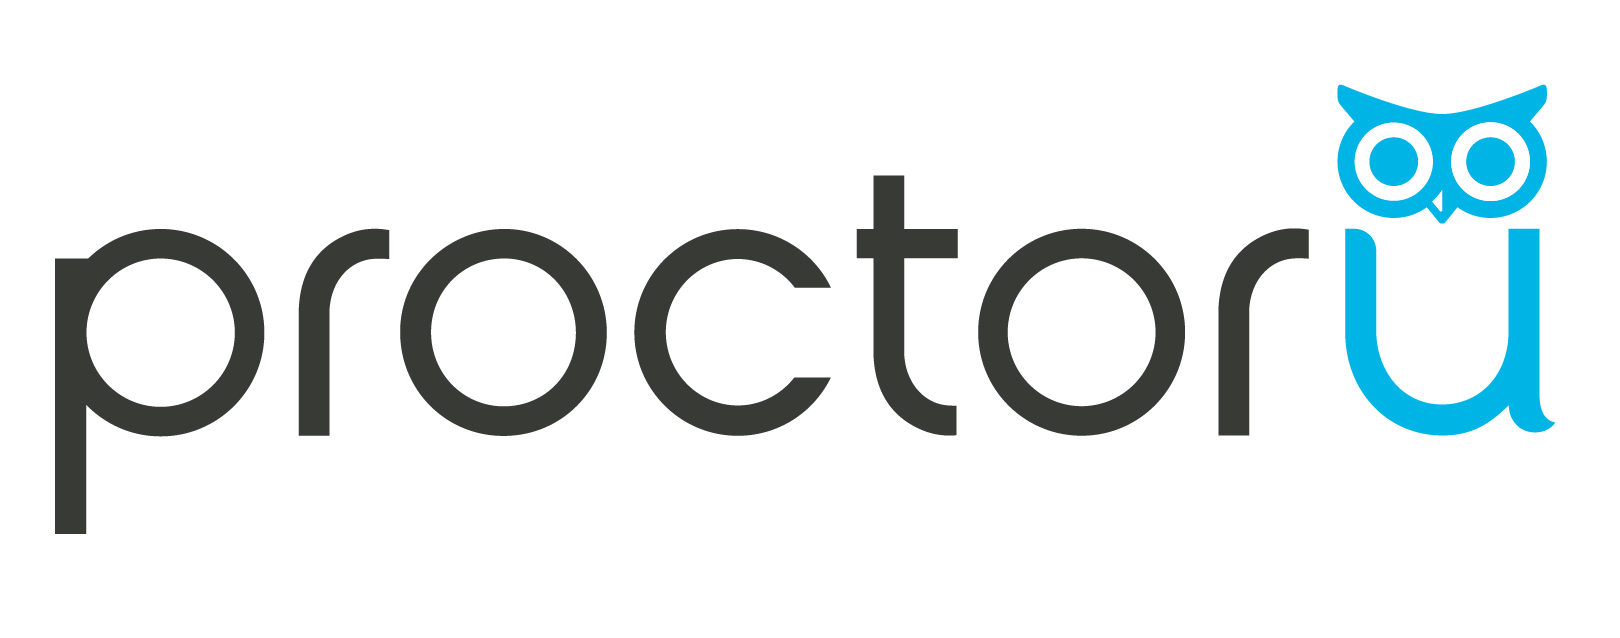 Proctor Logo - ProctorU Competitors, Revenue and Employees - Owler Company Profile